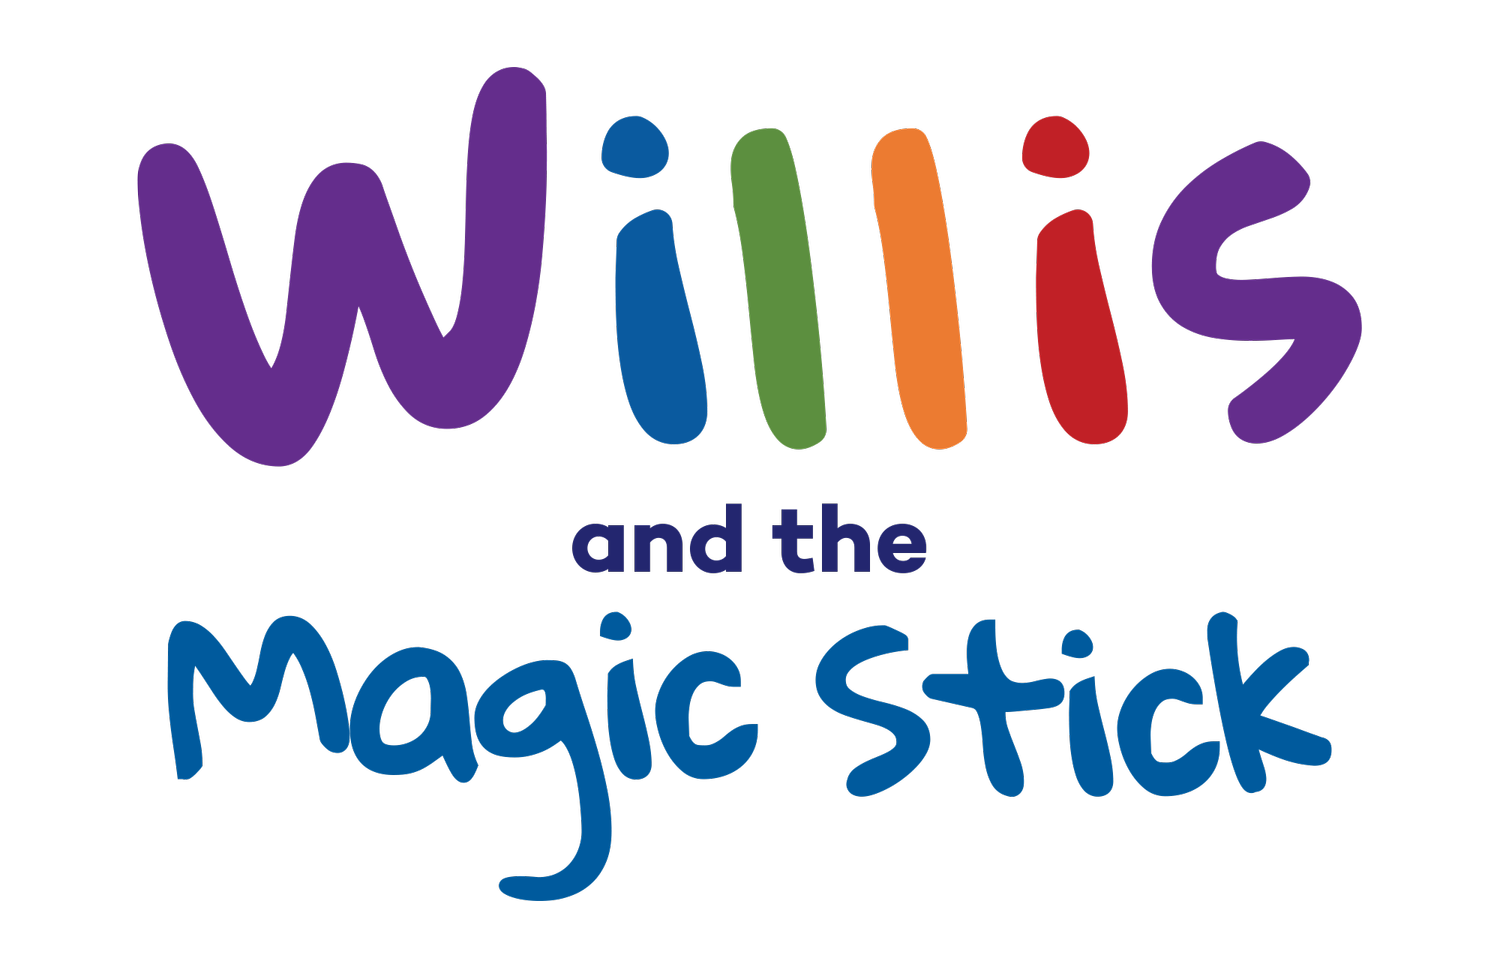 Willis and the Magic Stick